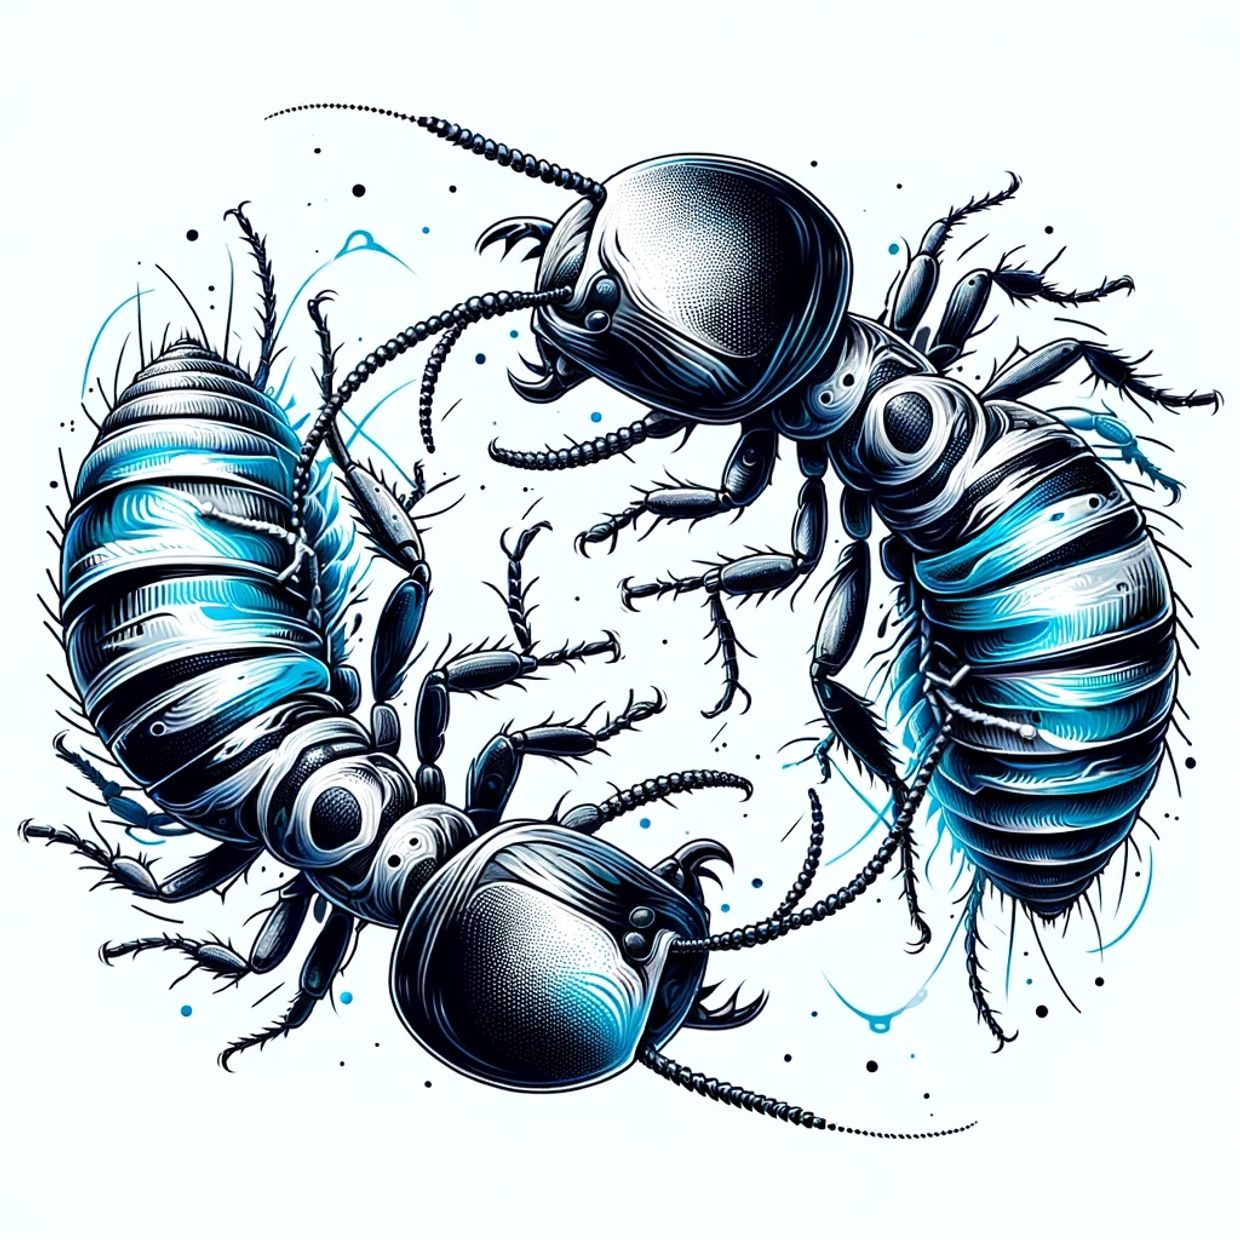 Termites mating